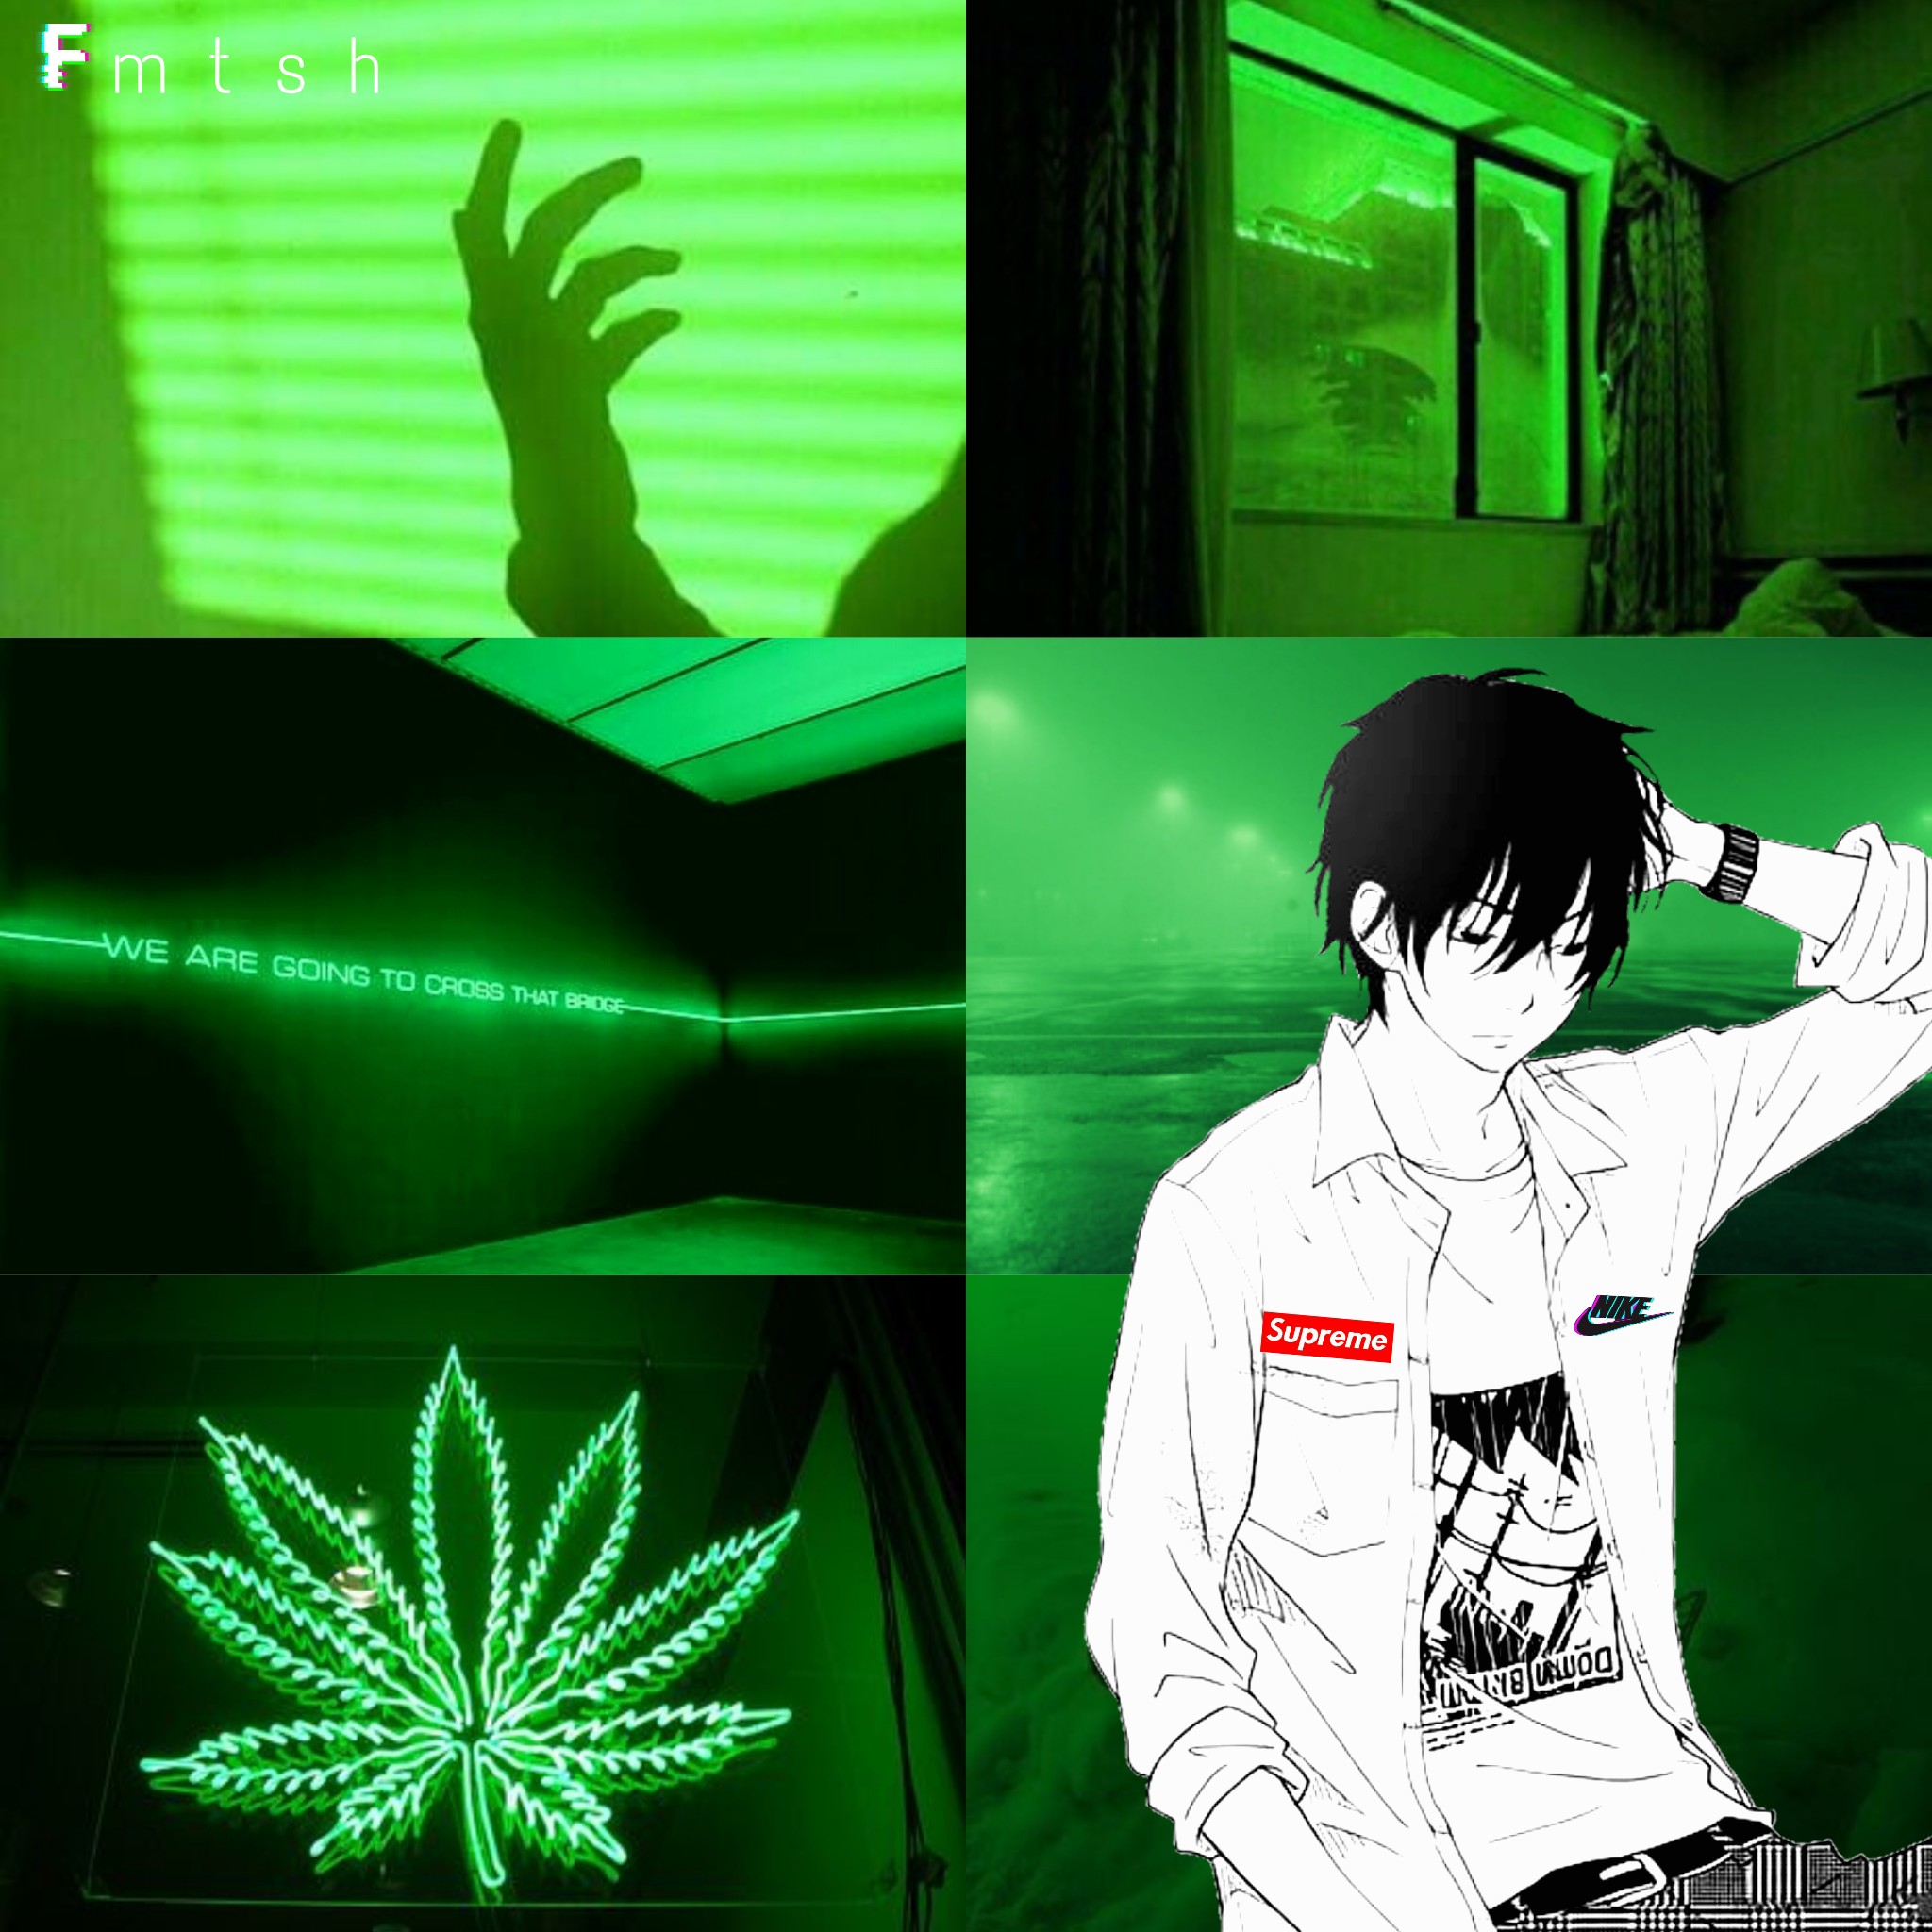  Anime  Green  Aesthetic 